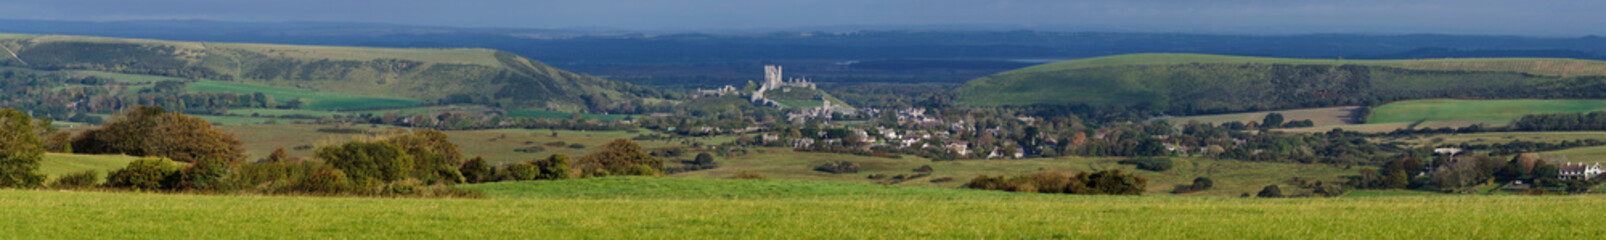 UK, England, Dorset, Corfe Castle panorama